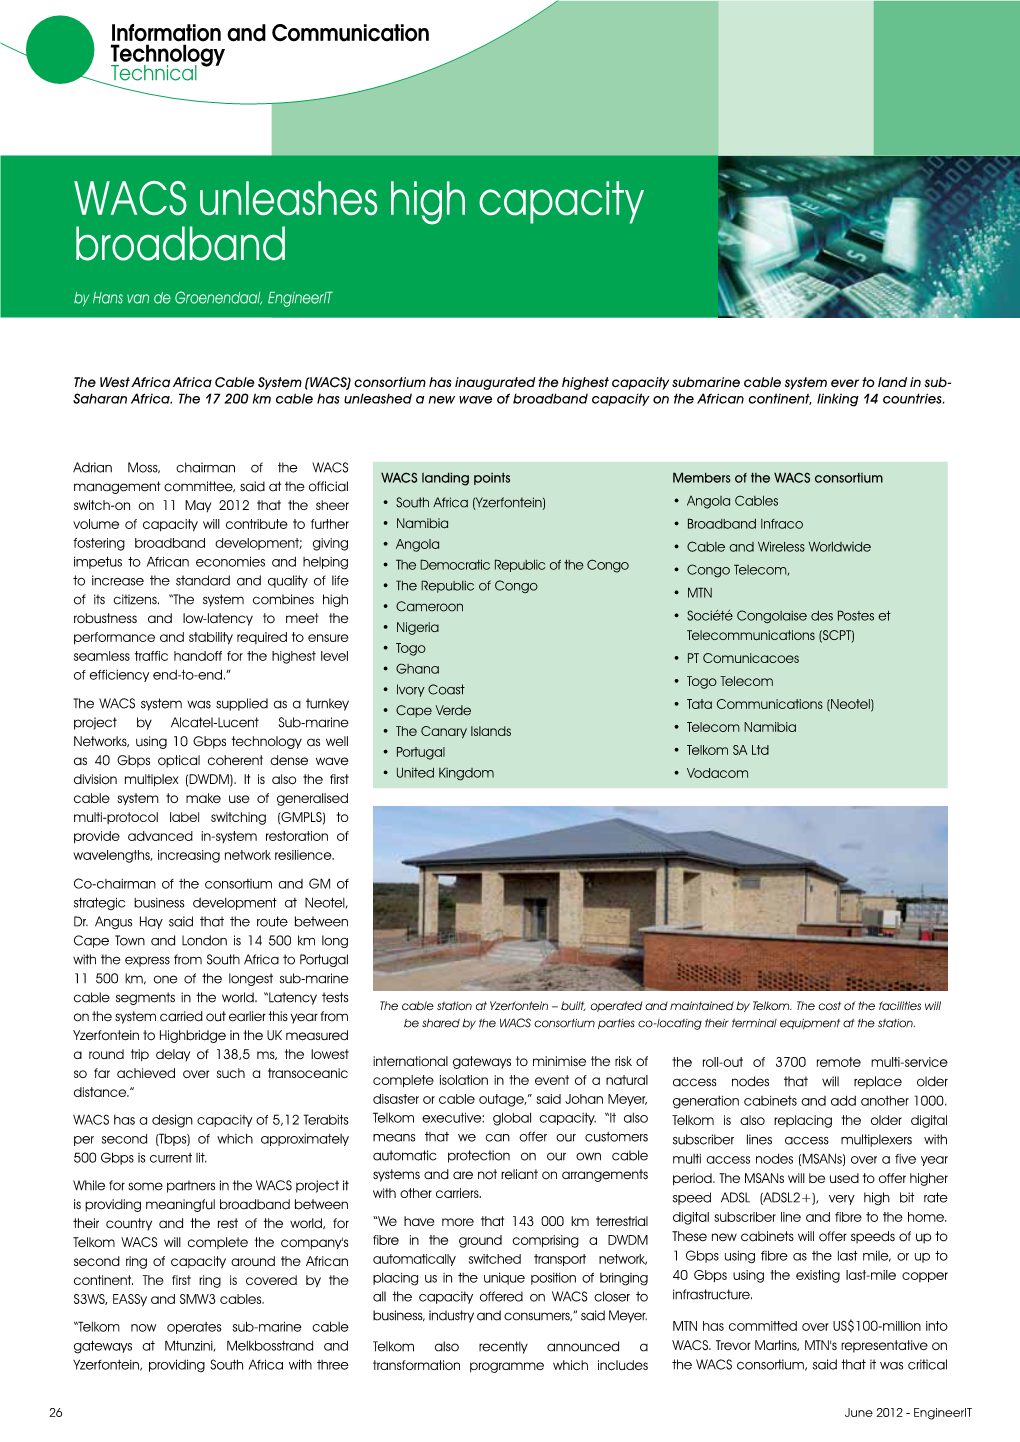 WACS Unleashes High Capacity Broadband